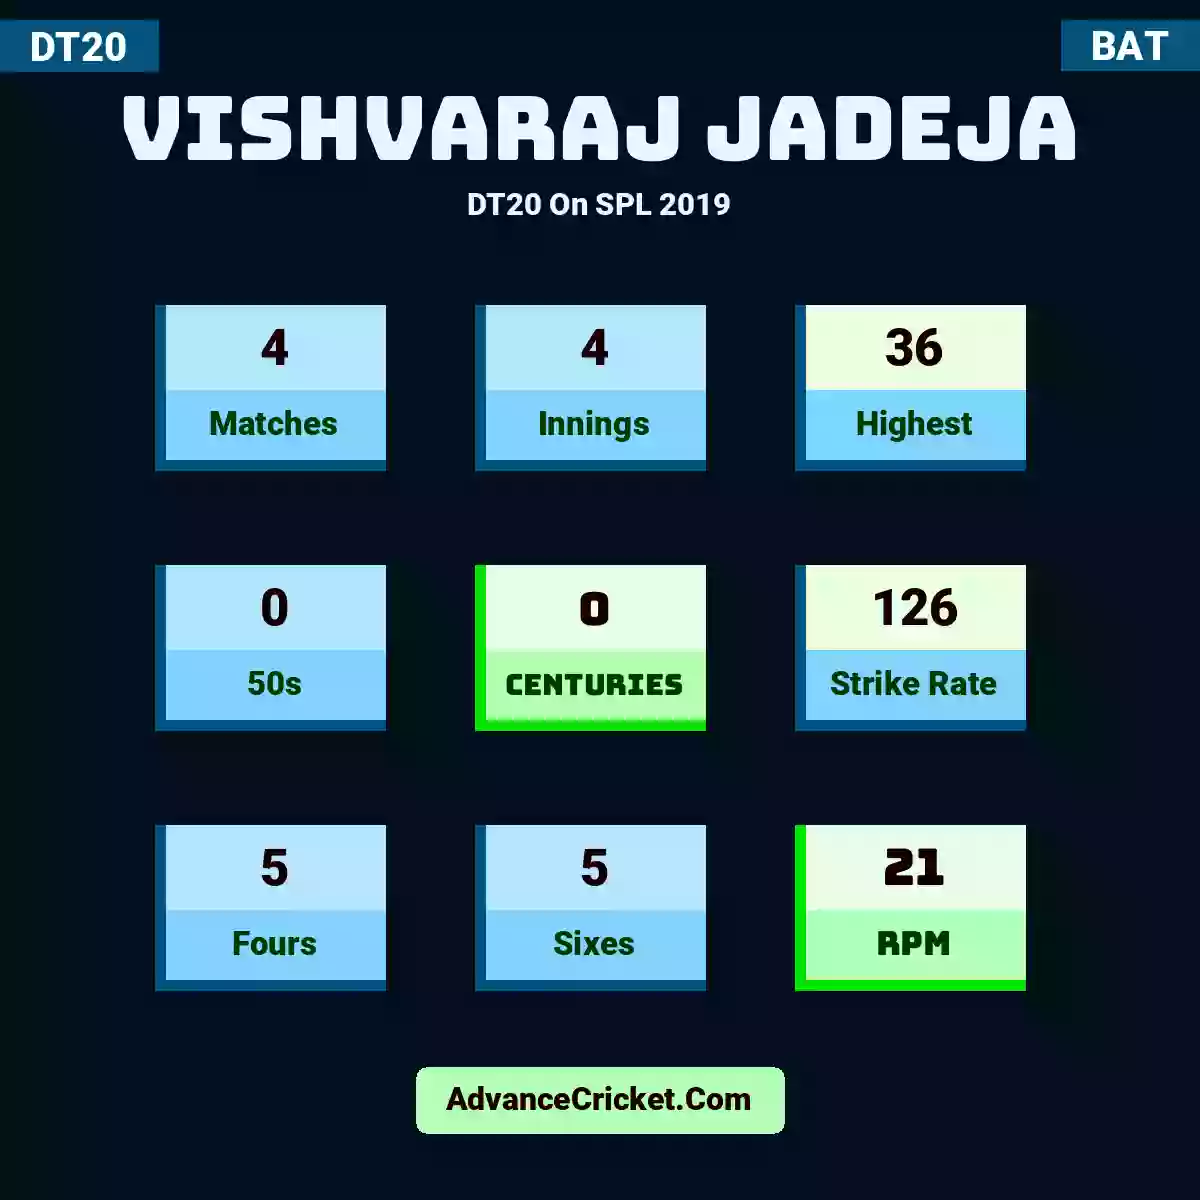 Vishvaraj Jadeja DT20  On SPL 2019, Vishvaraj Jadeja played 4 matches, scored 36 runs as highest, 0 half-centuries, and 0 centuries, with a strike rate of 126. V.Jadeja hit 5 fours and 5 sixes, with an RPM of 21.